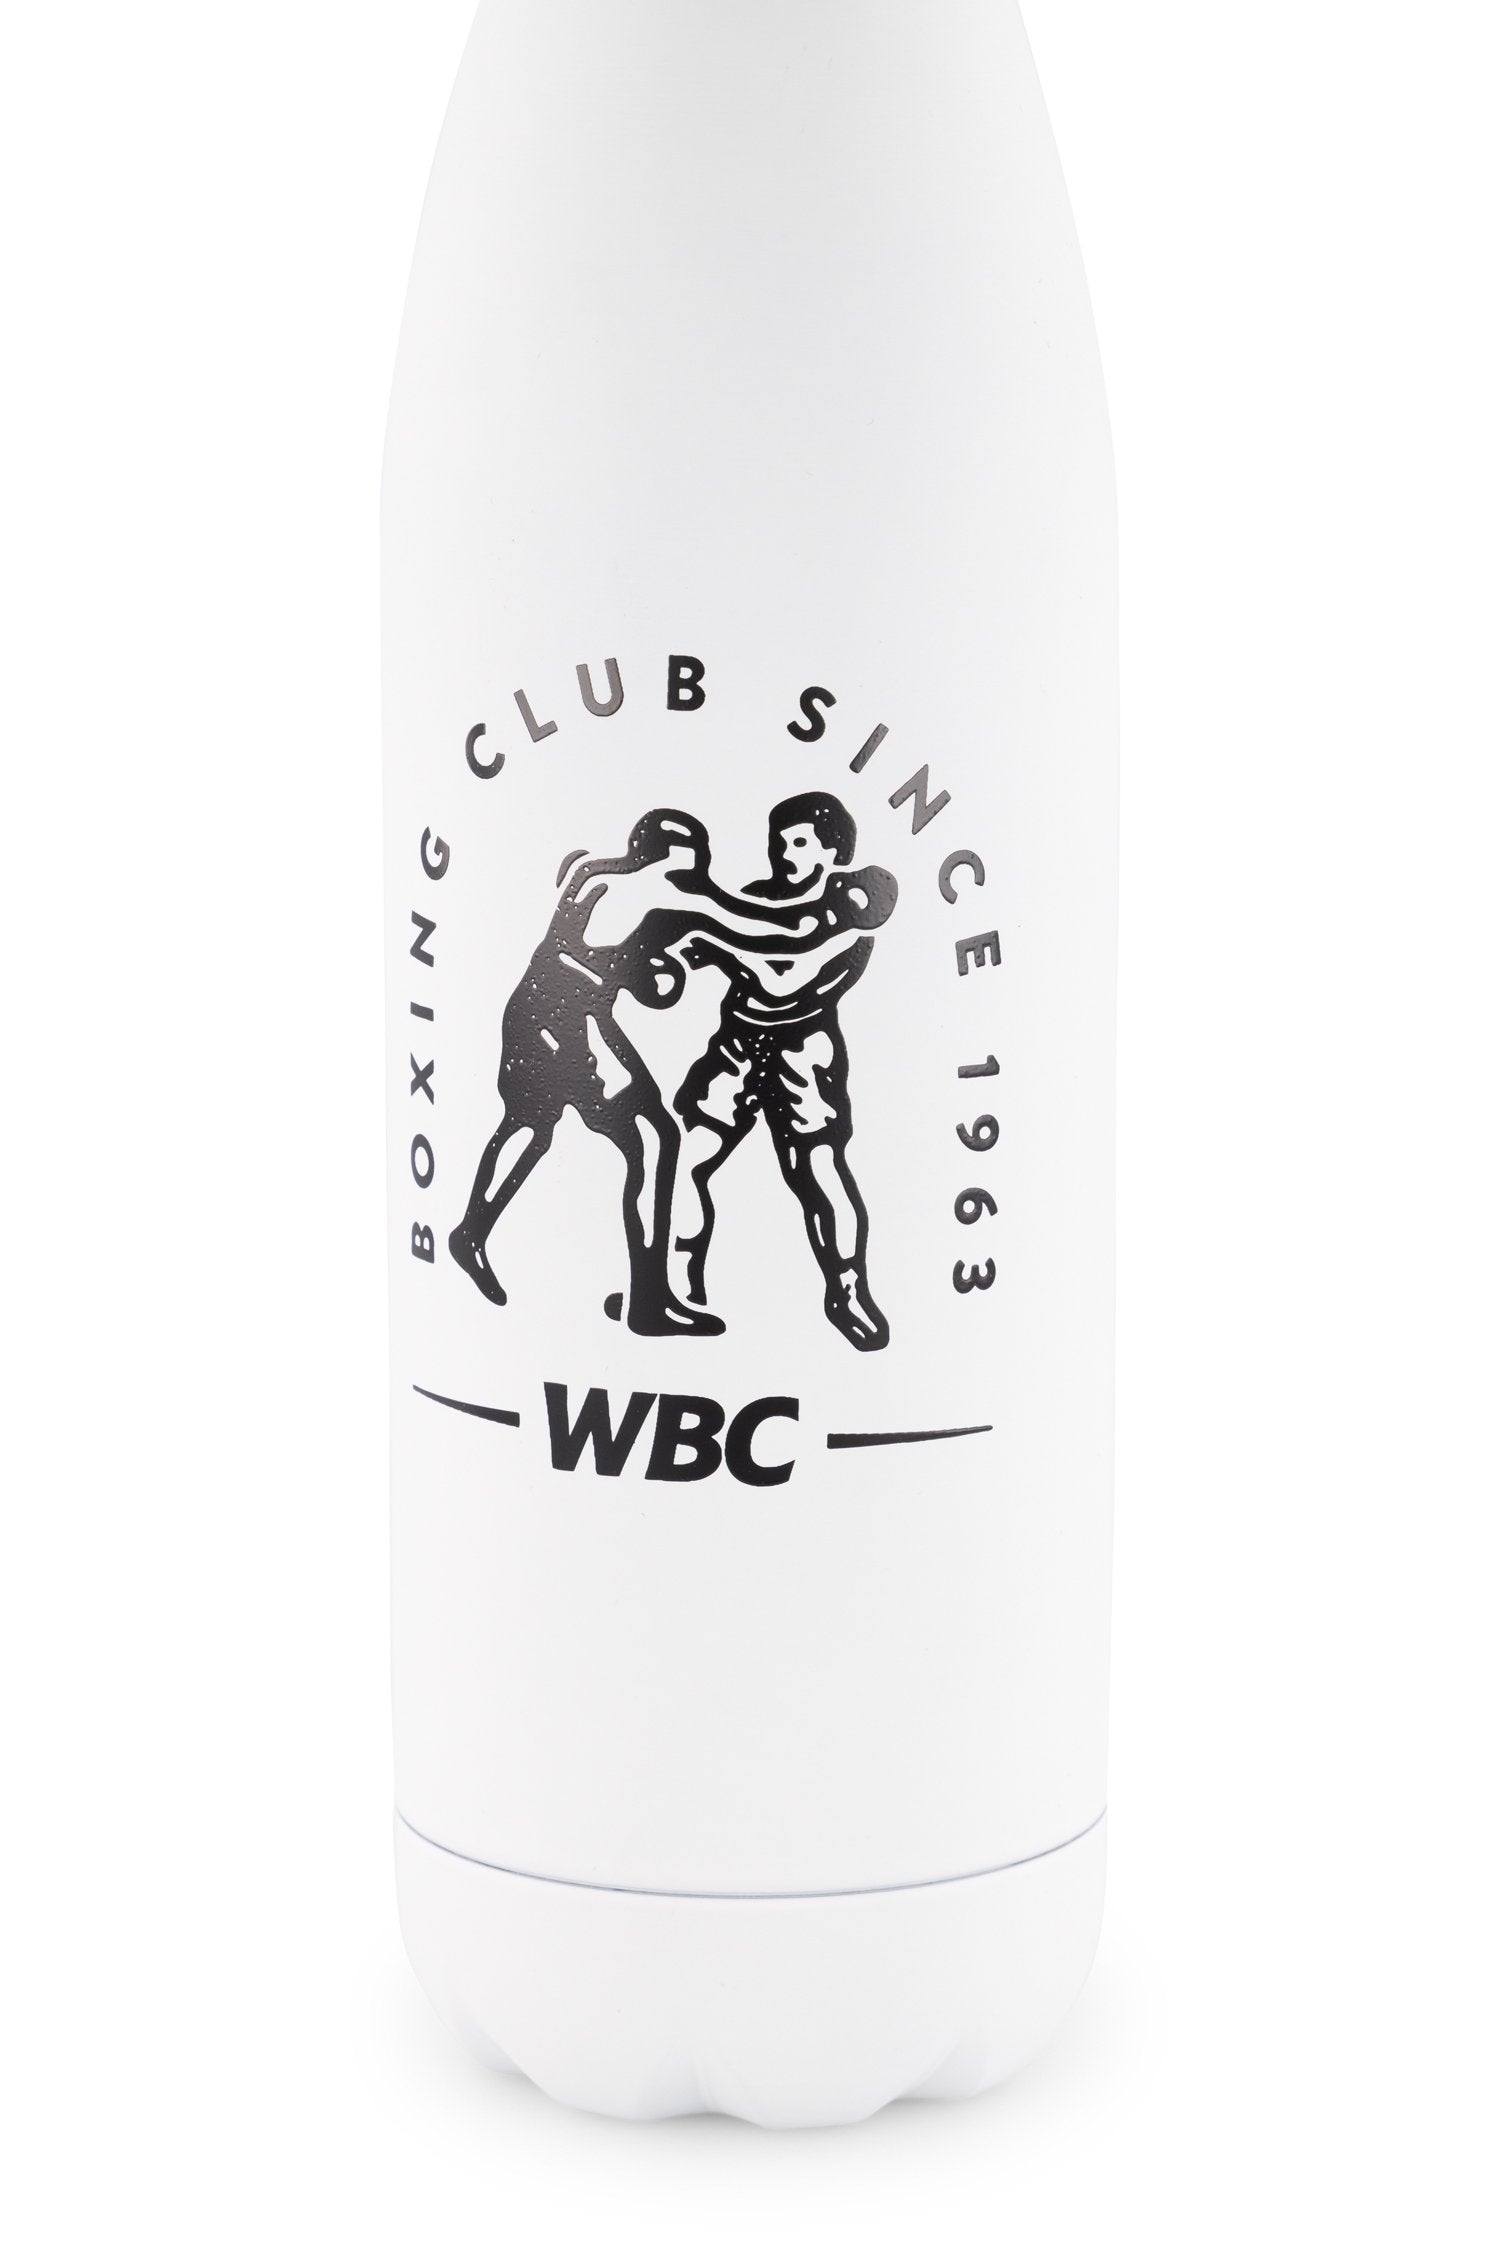 WBC Water Bottles Boxing Club Bottle